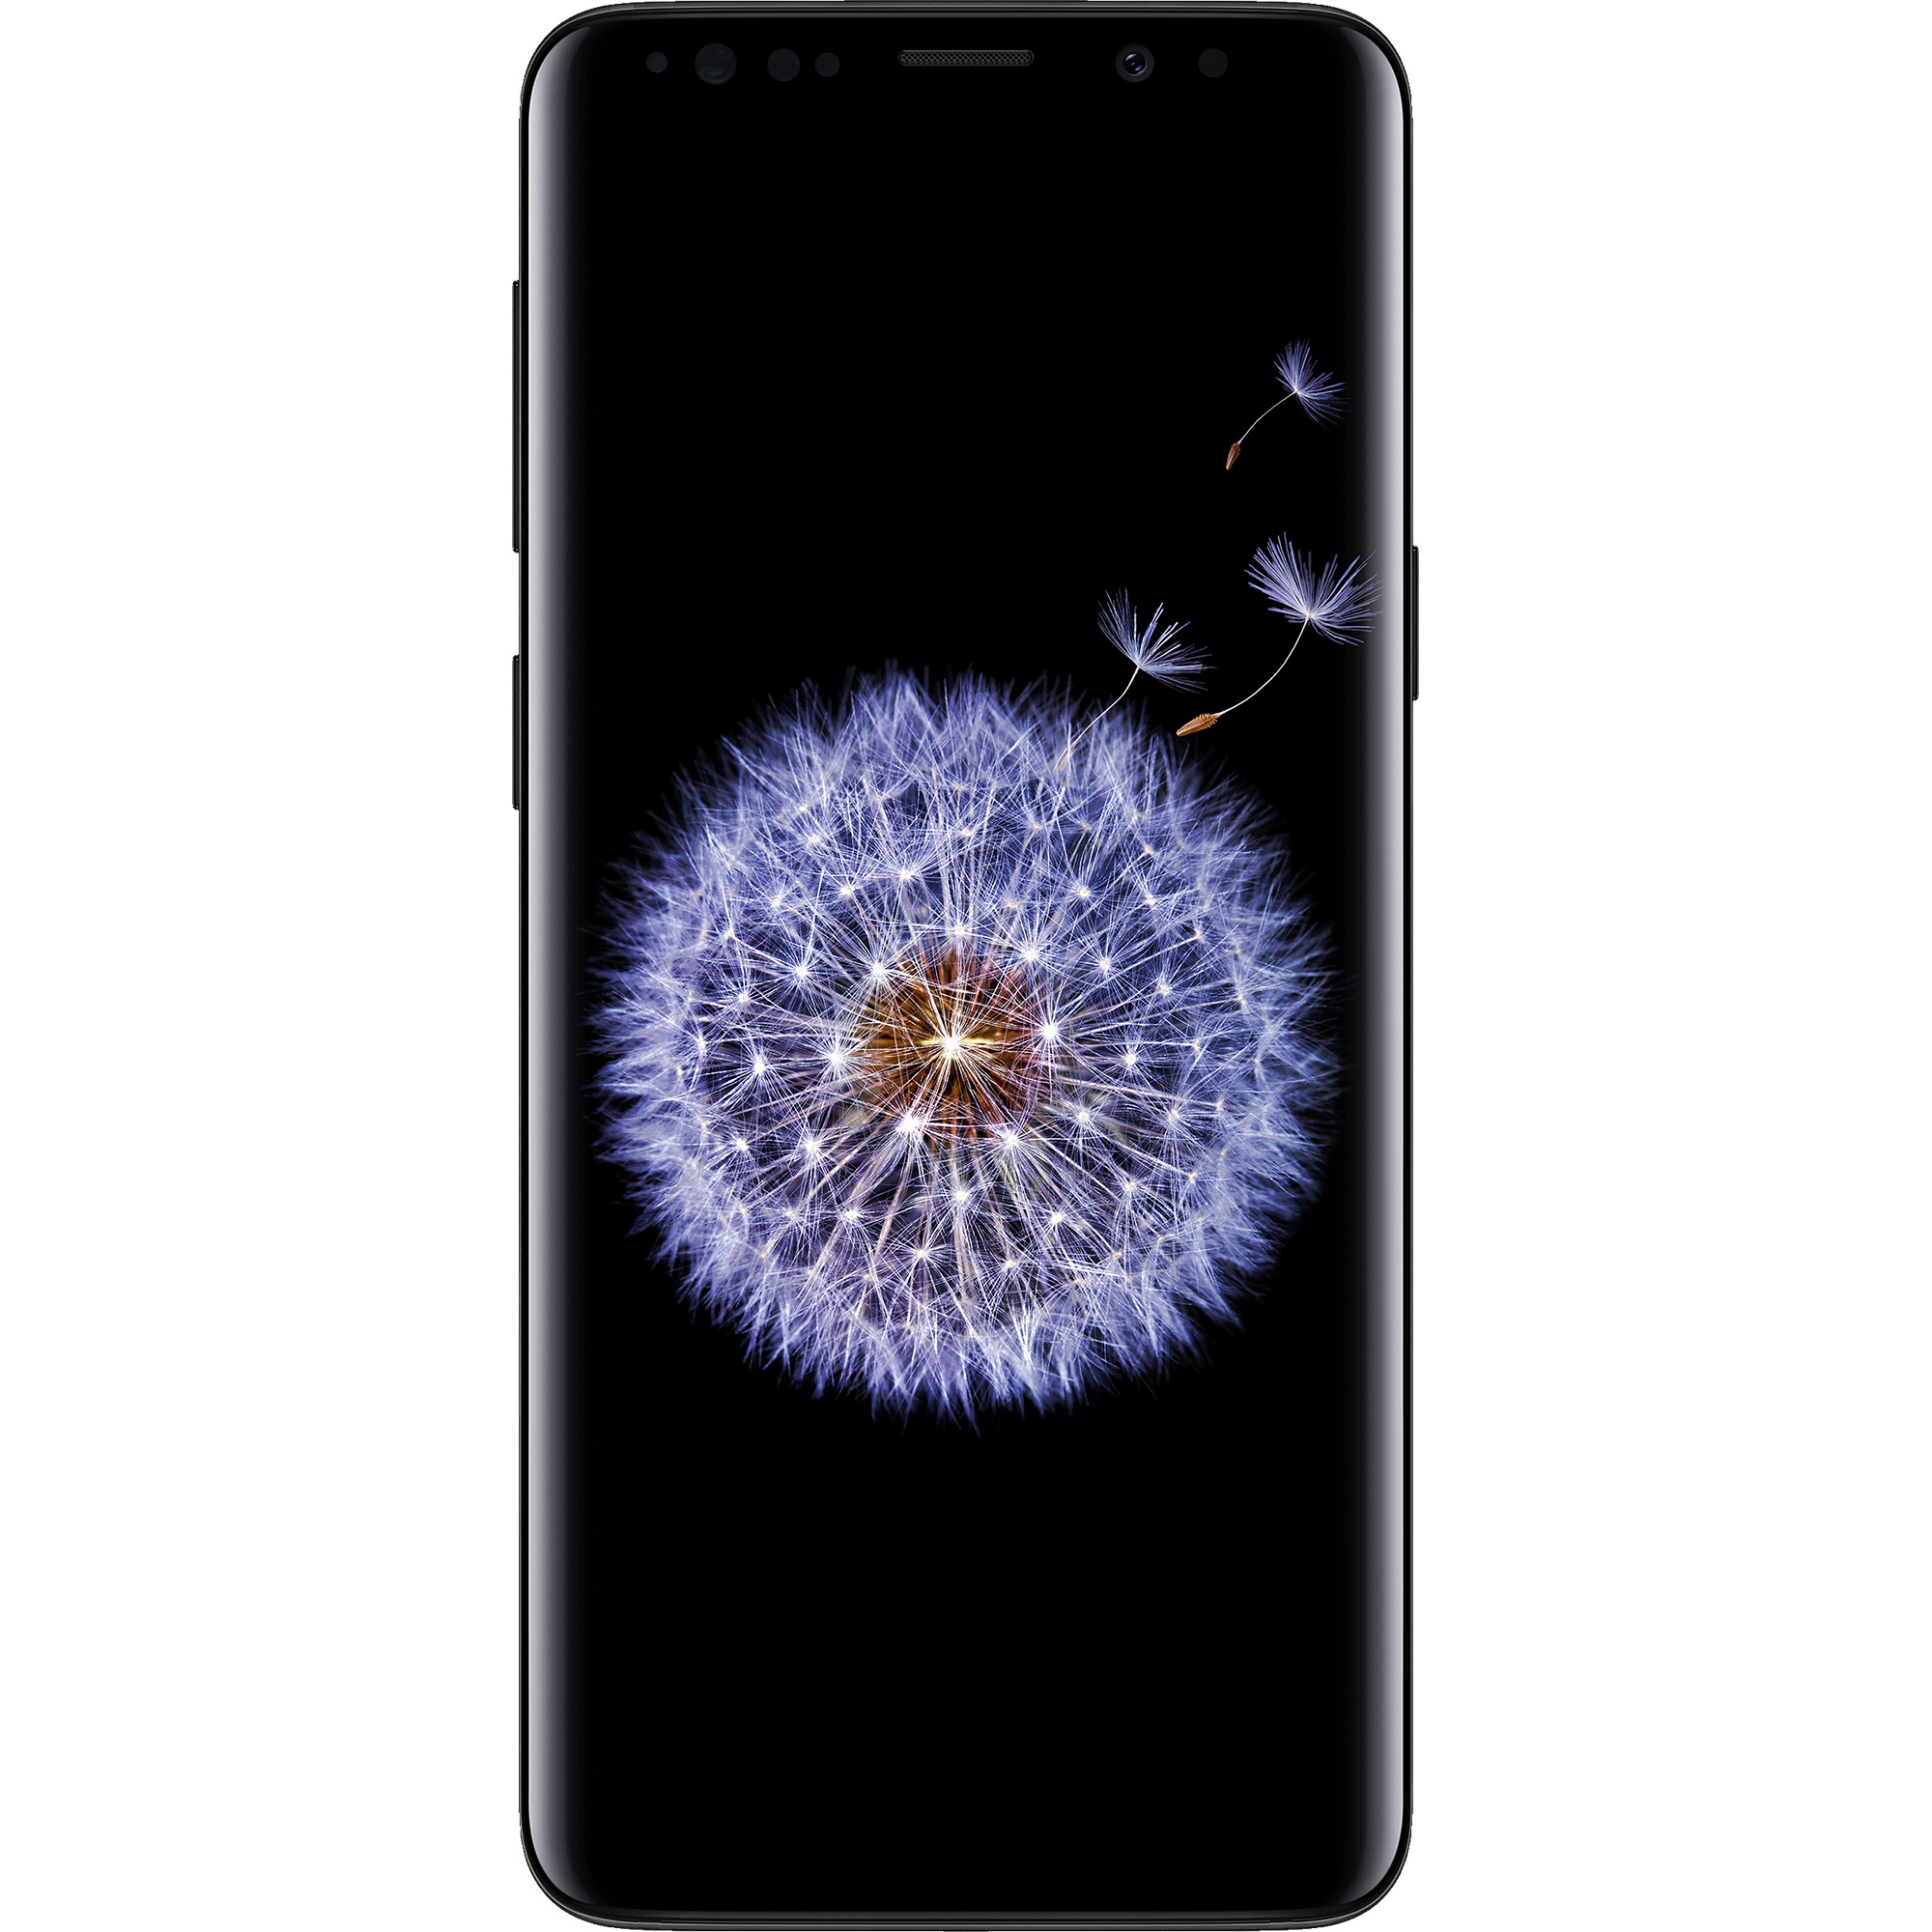 SAMSUNG Galaxy S9 G960U 64GB GSM Unlocked (USA Version) - Midnight Black (Used) + Liquid Nano Screen Protector - image 1 of 5